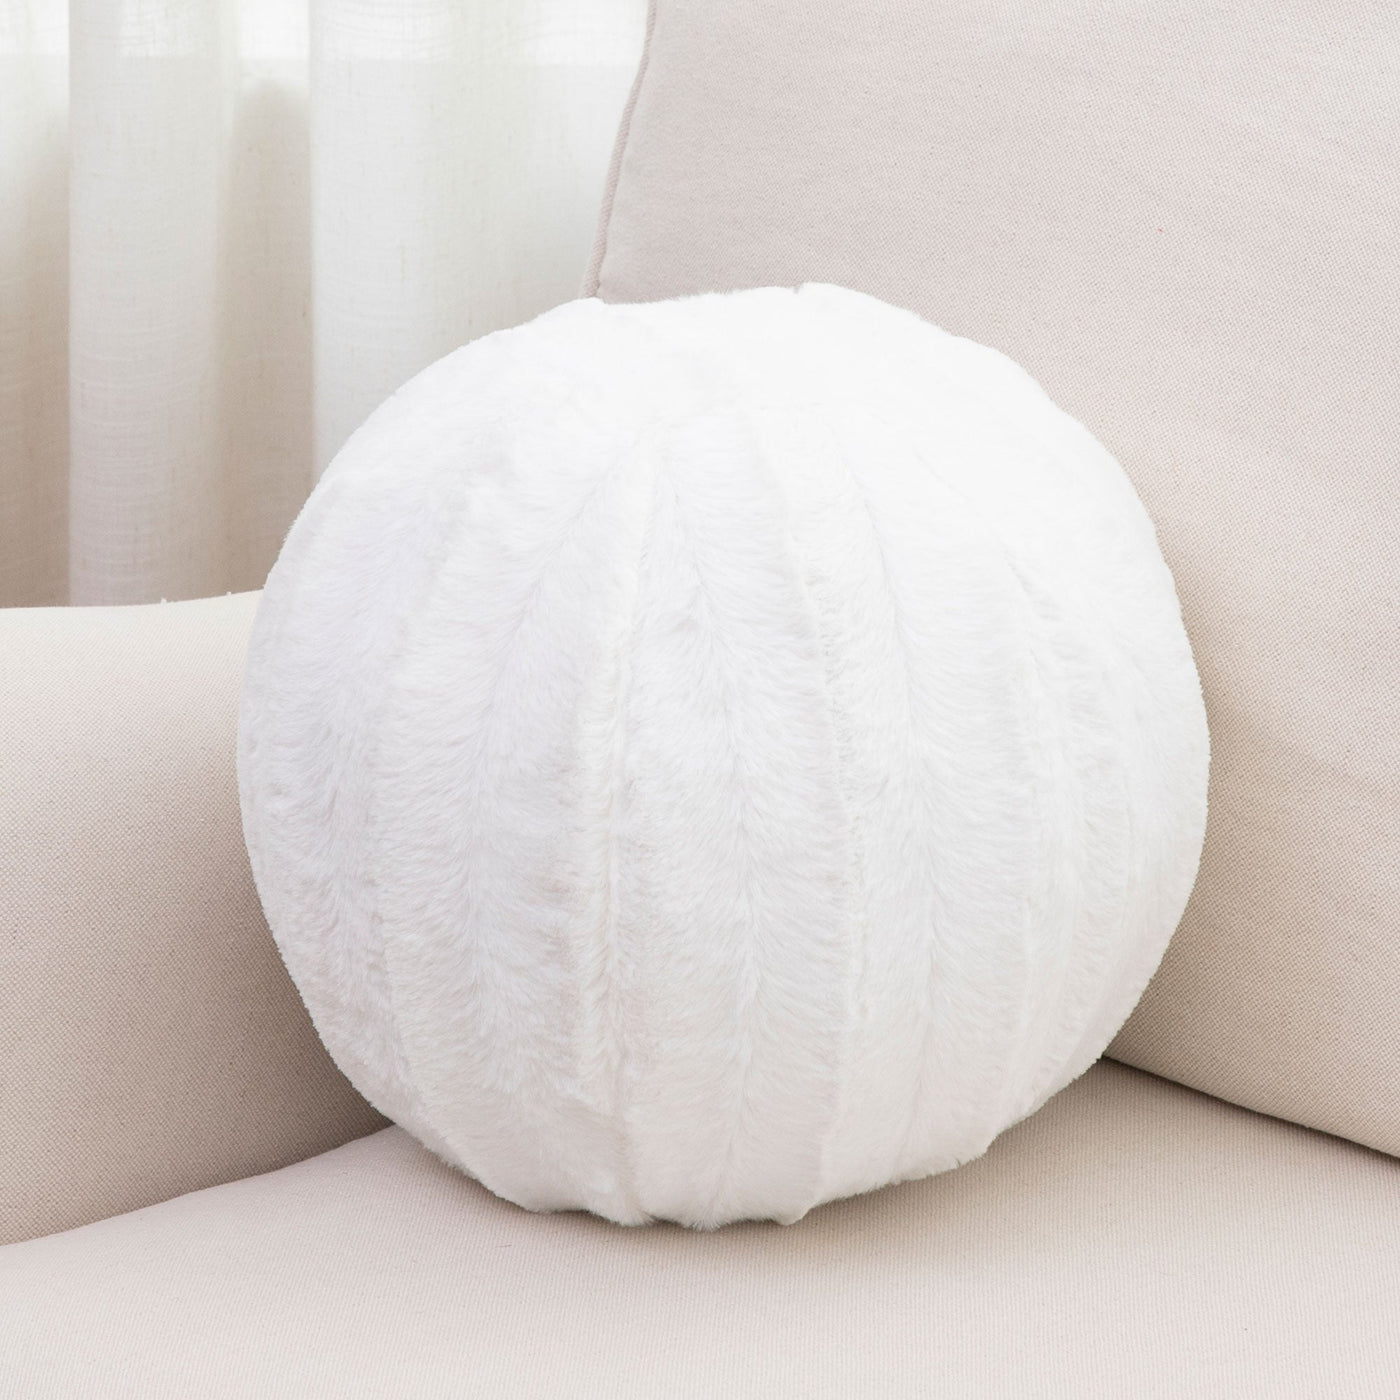 Cheer Collection Ball Throw Pillows for Living Room Decor, Decorative